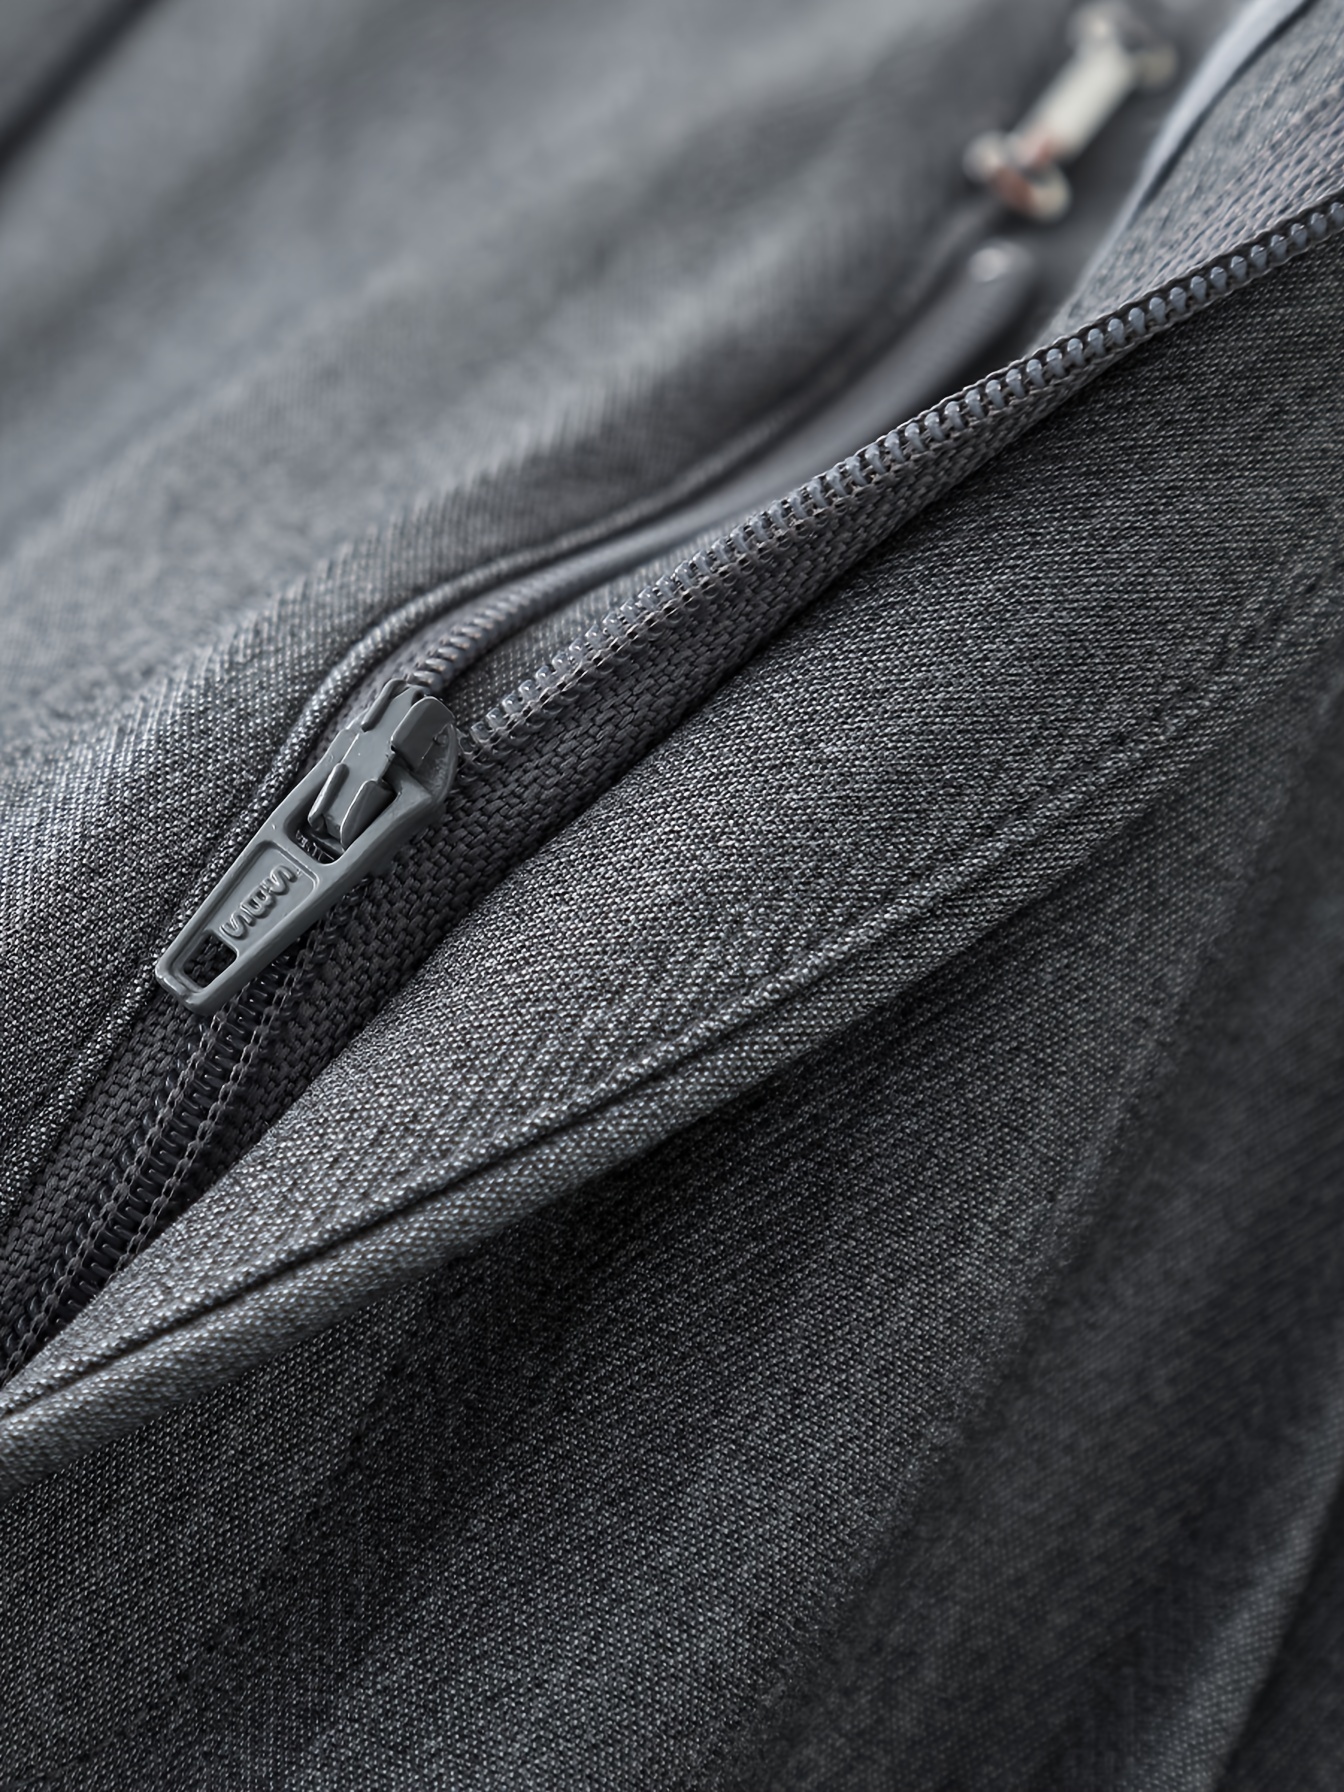 Black Pants with Silver Zipper Detail